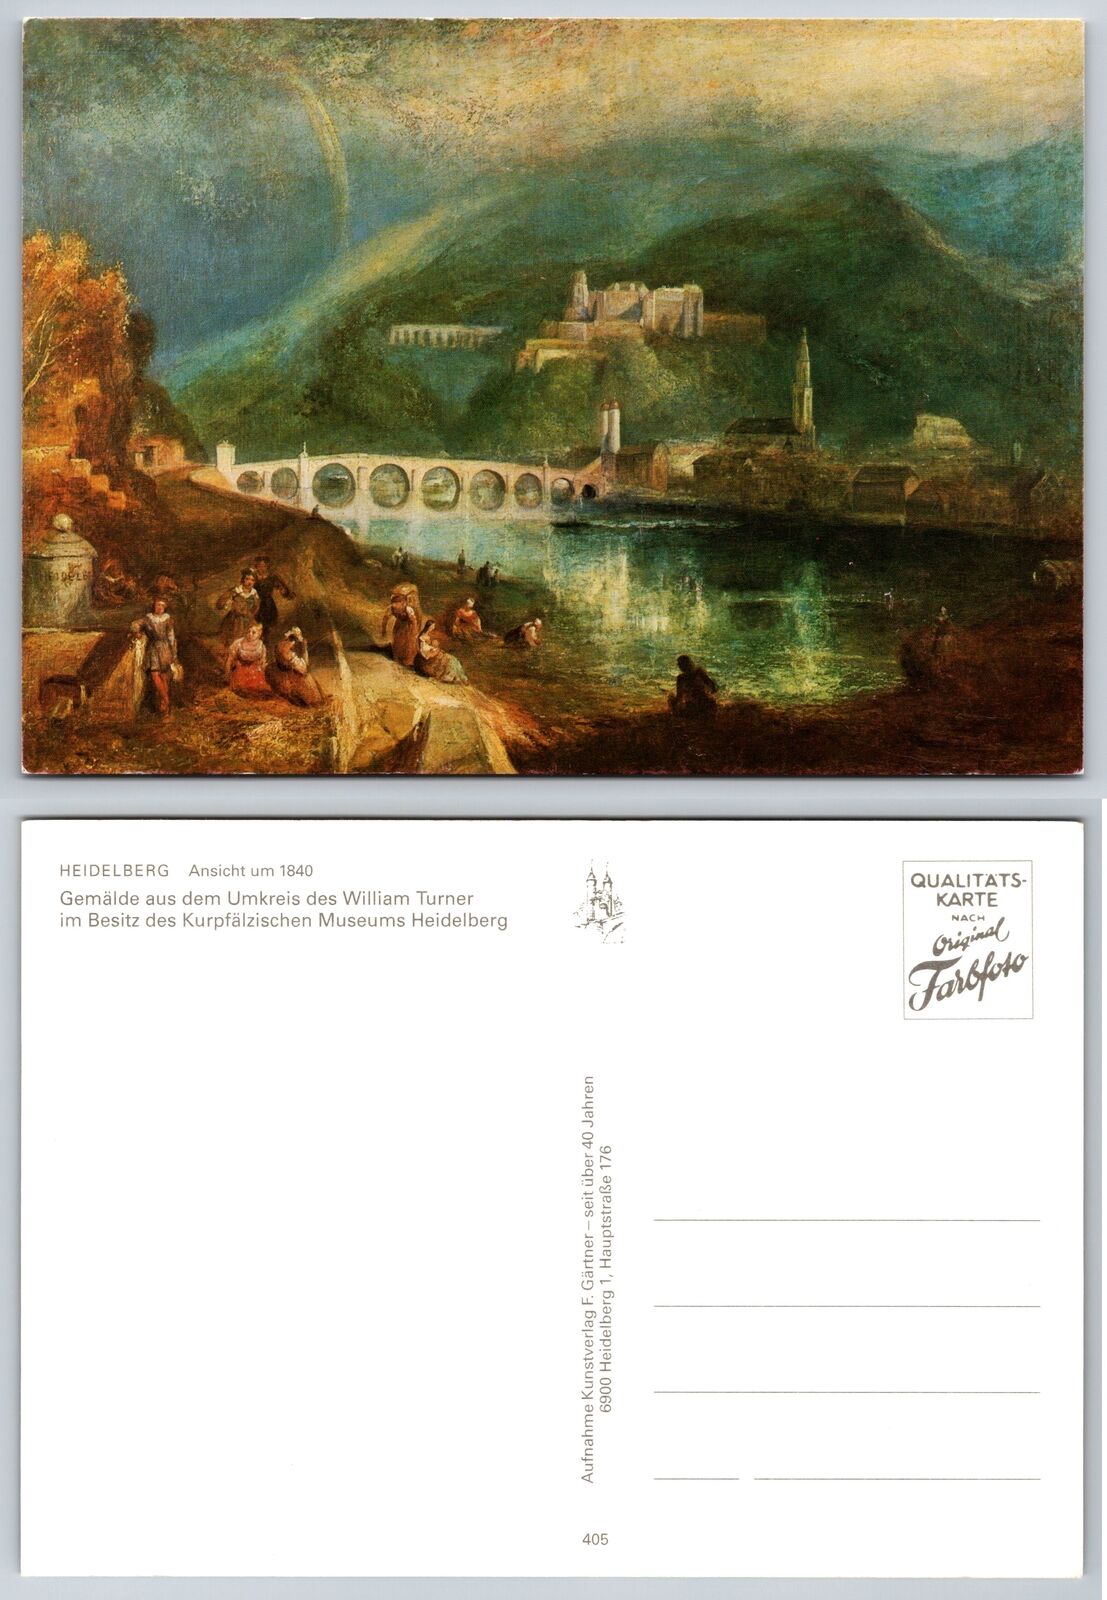 postcard - HEIDELBERG, Germany - view around 1840 - William Turner